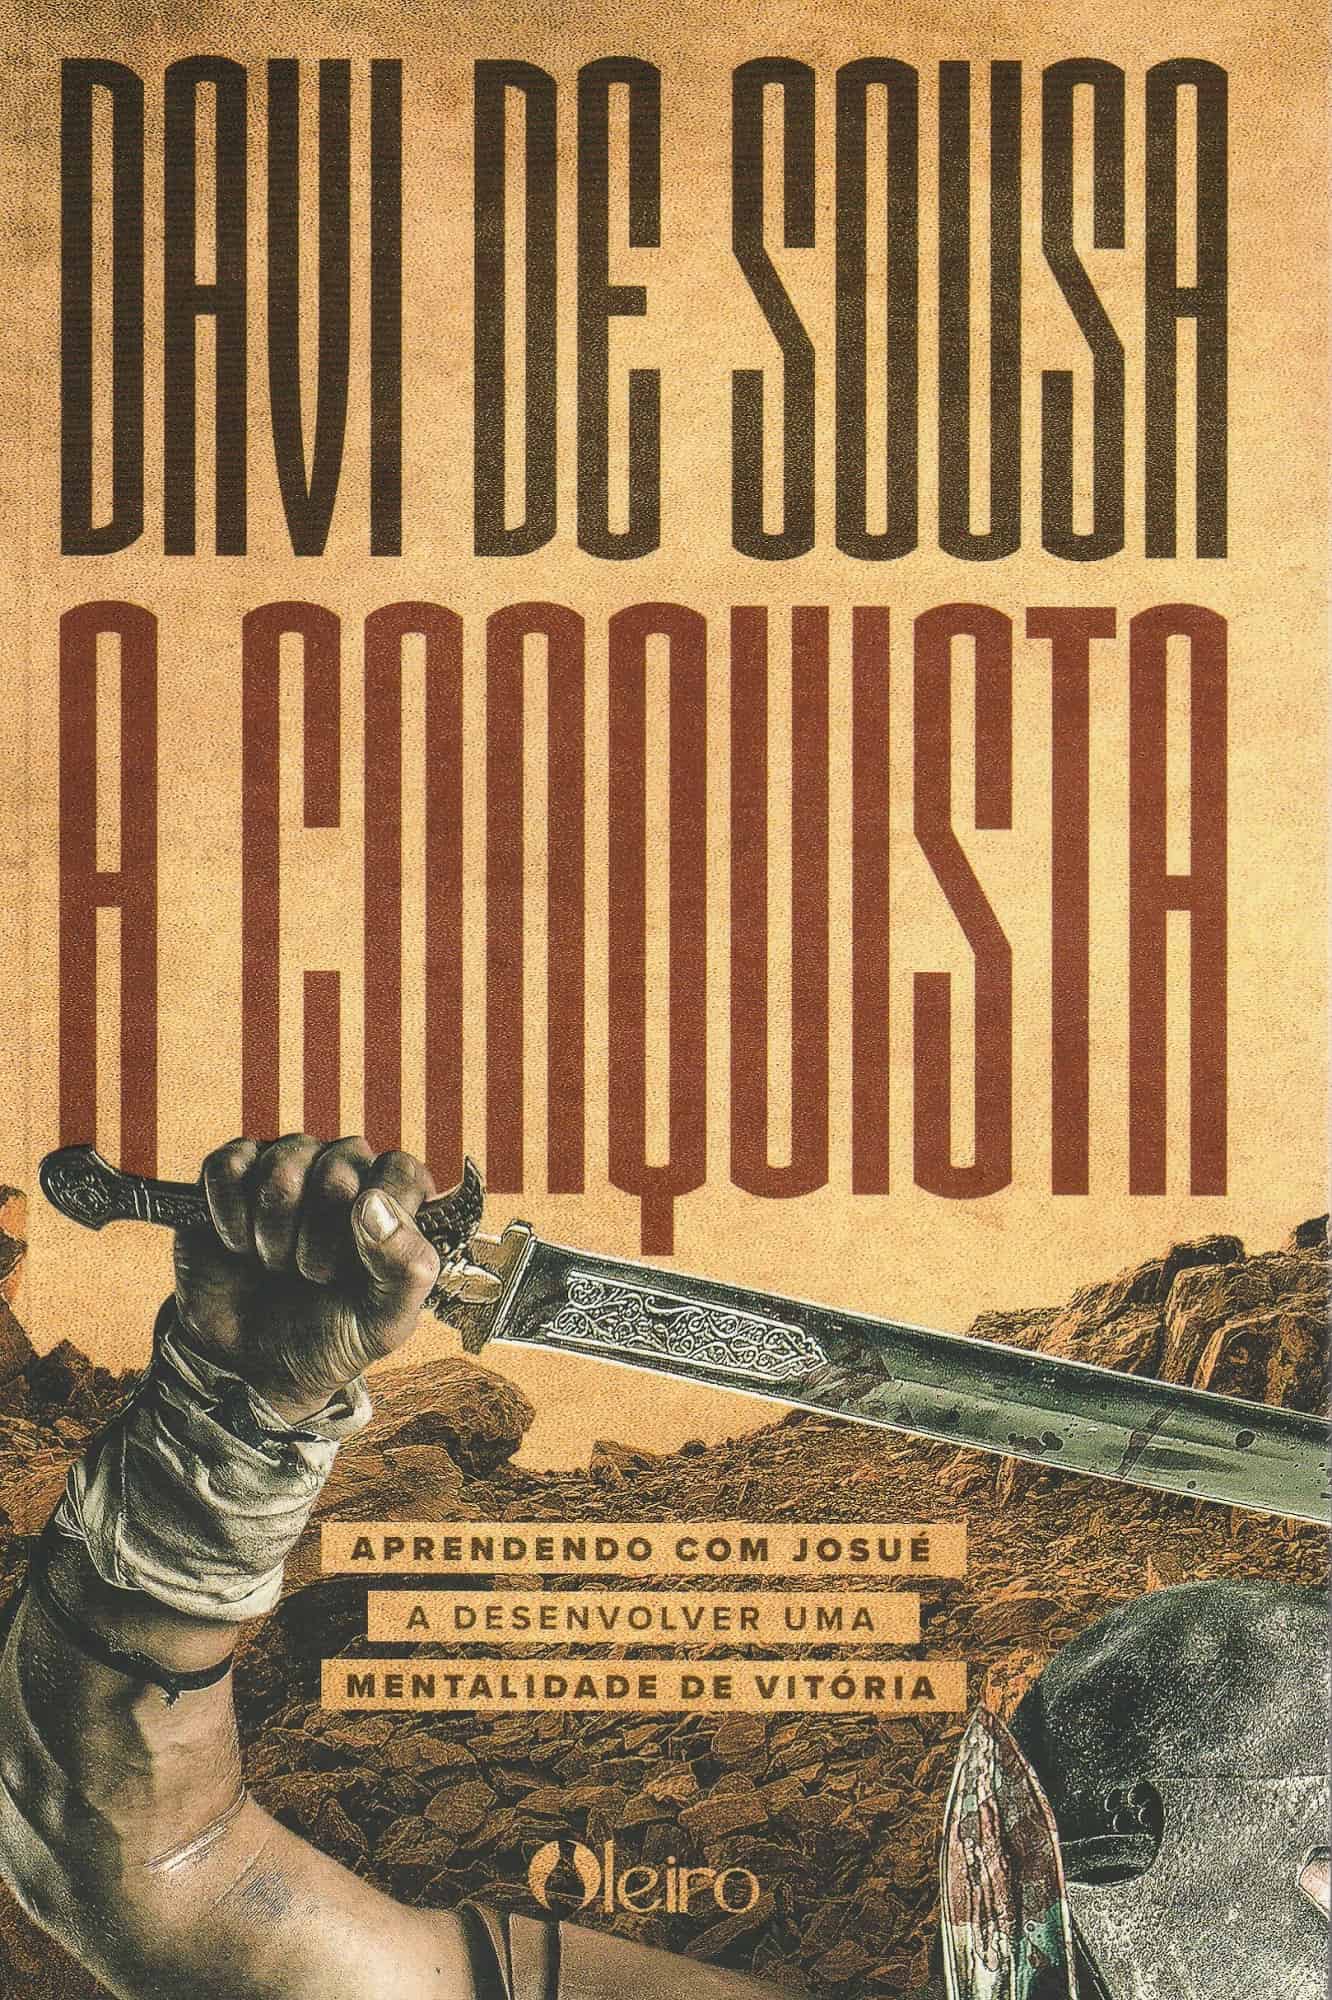 A Conquista - Davi de Sousa